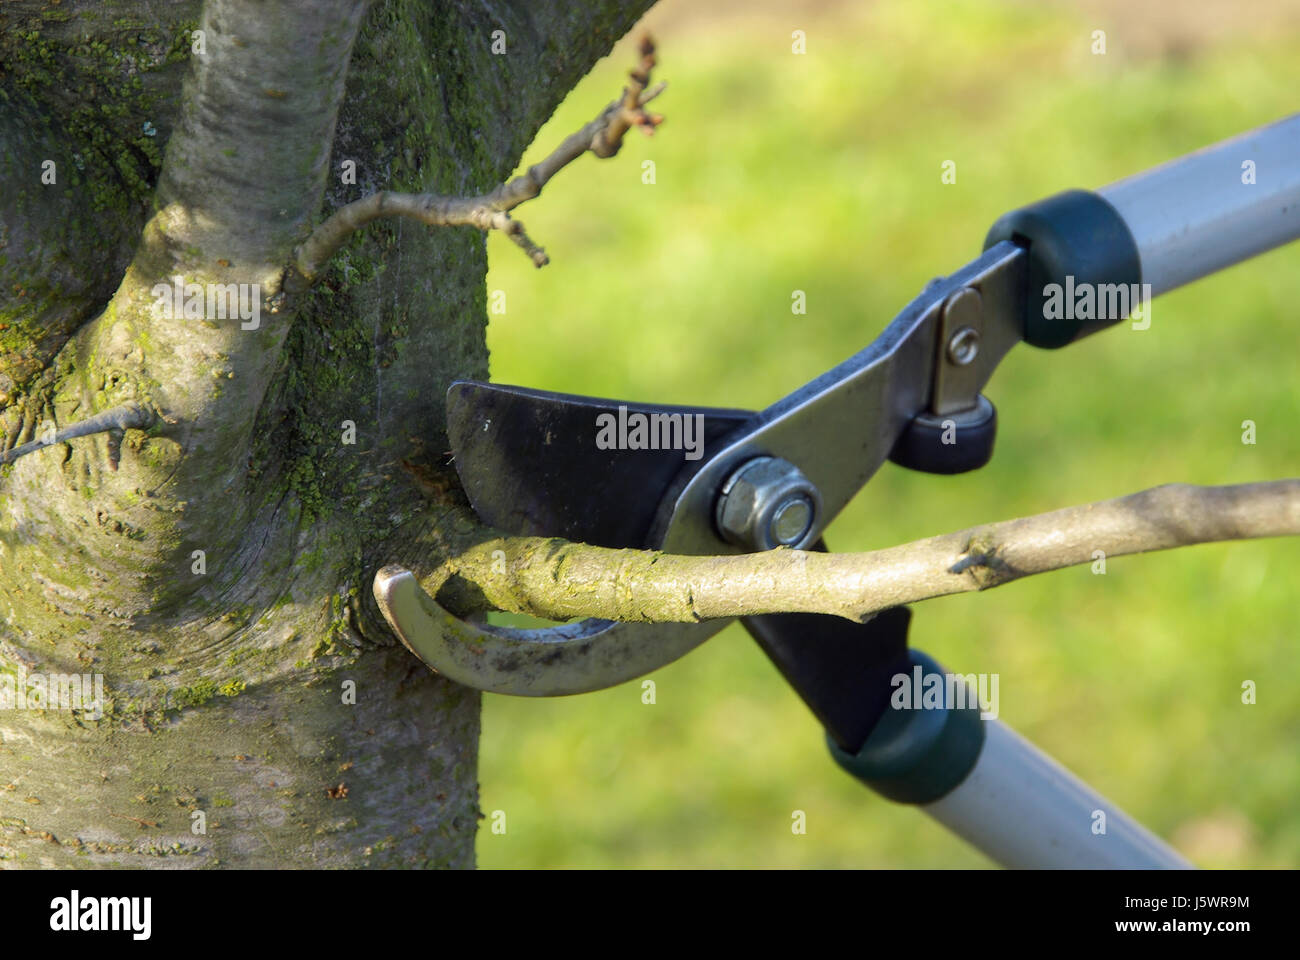 AST Schneiden Schere Schere kastrieren Gartenschere Secateur Baum Garten  Holz Stockfotografie - Alamy